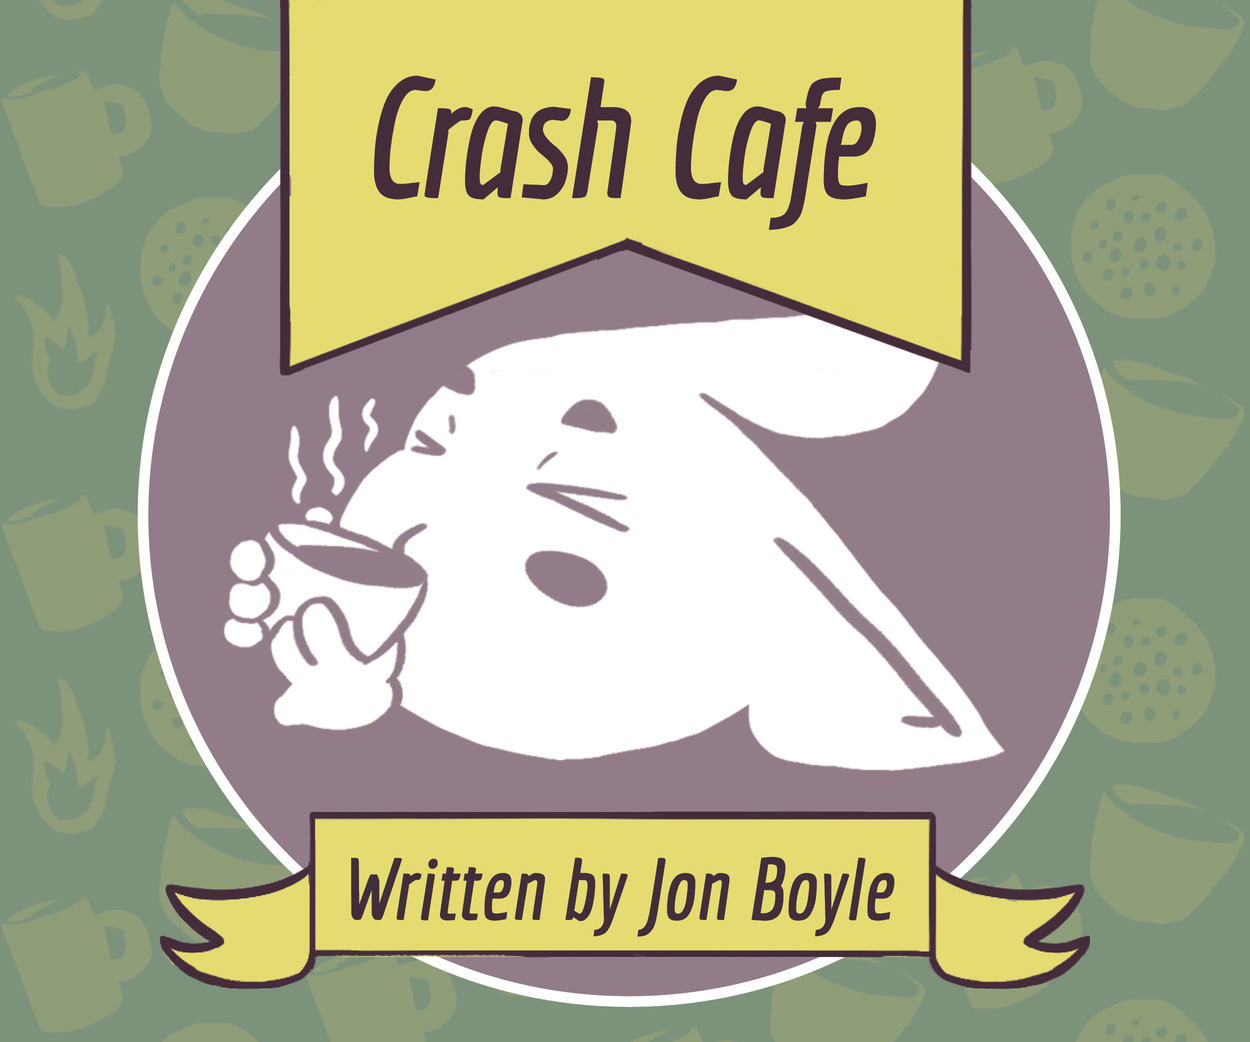 CRASH CAFE